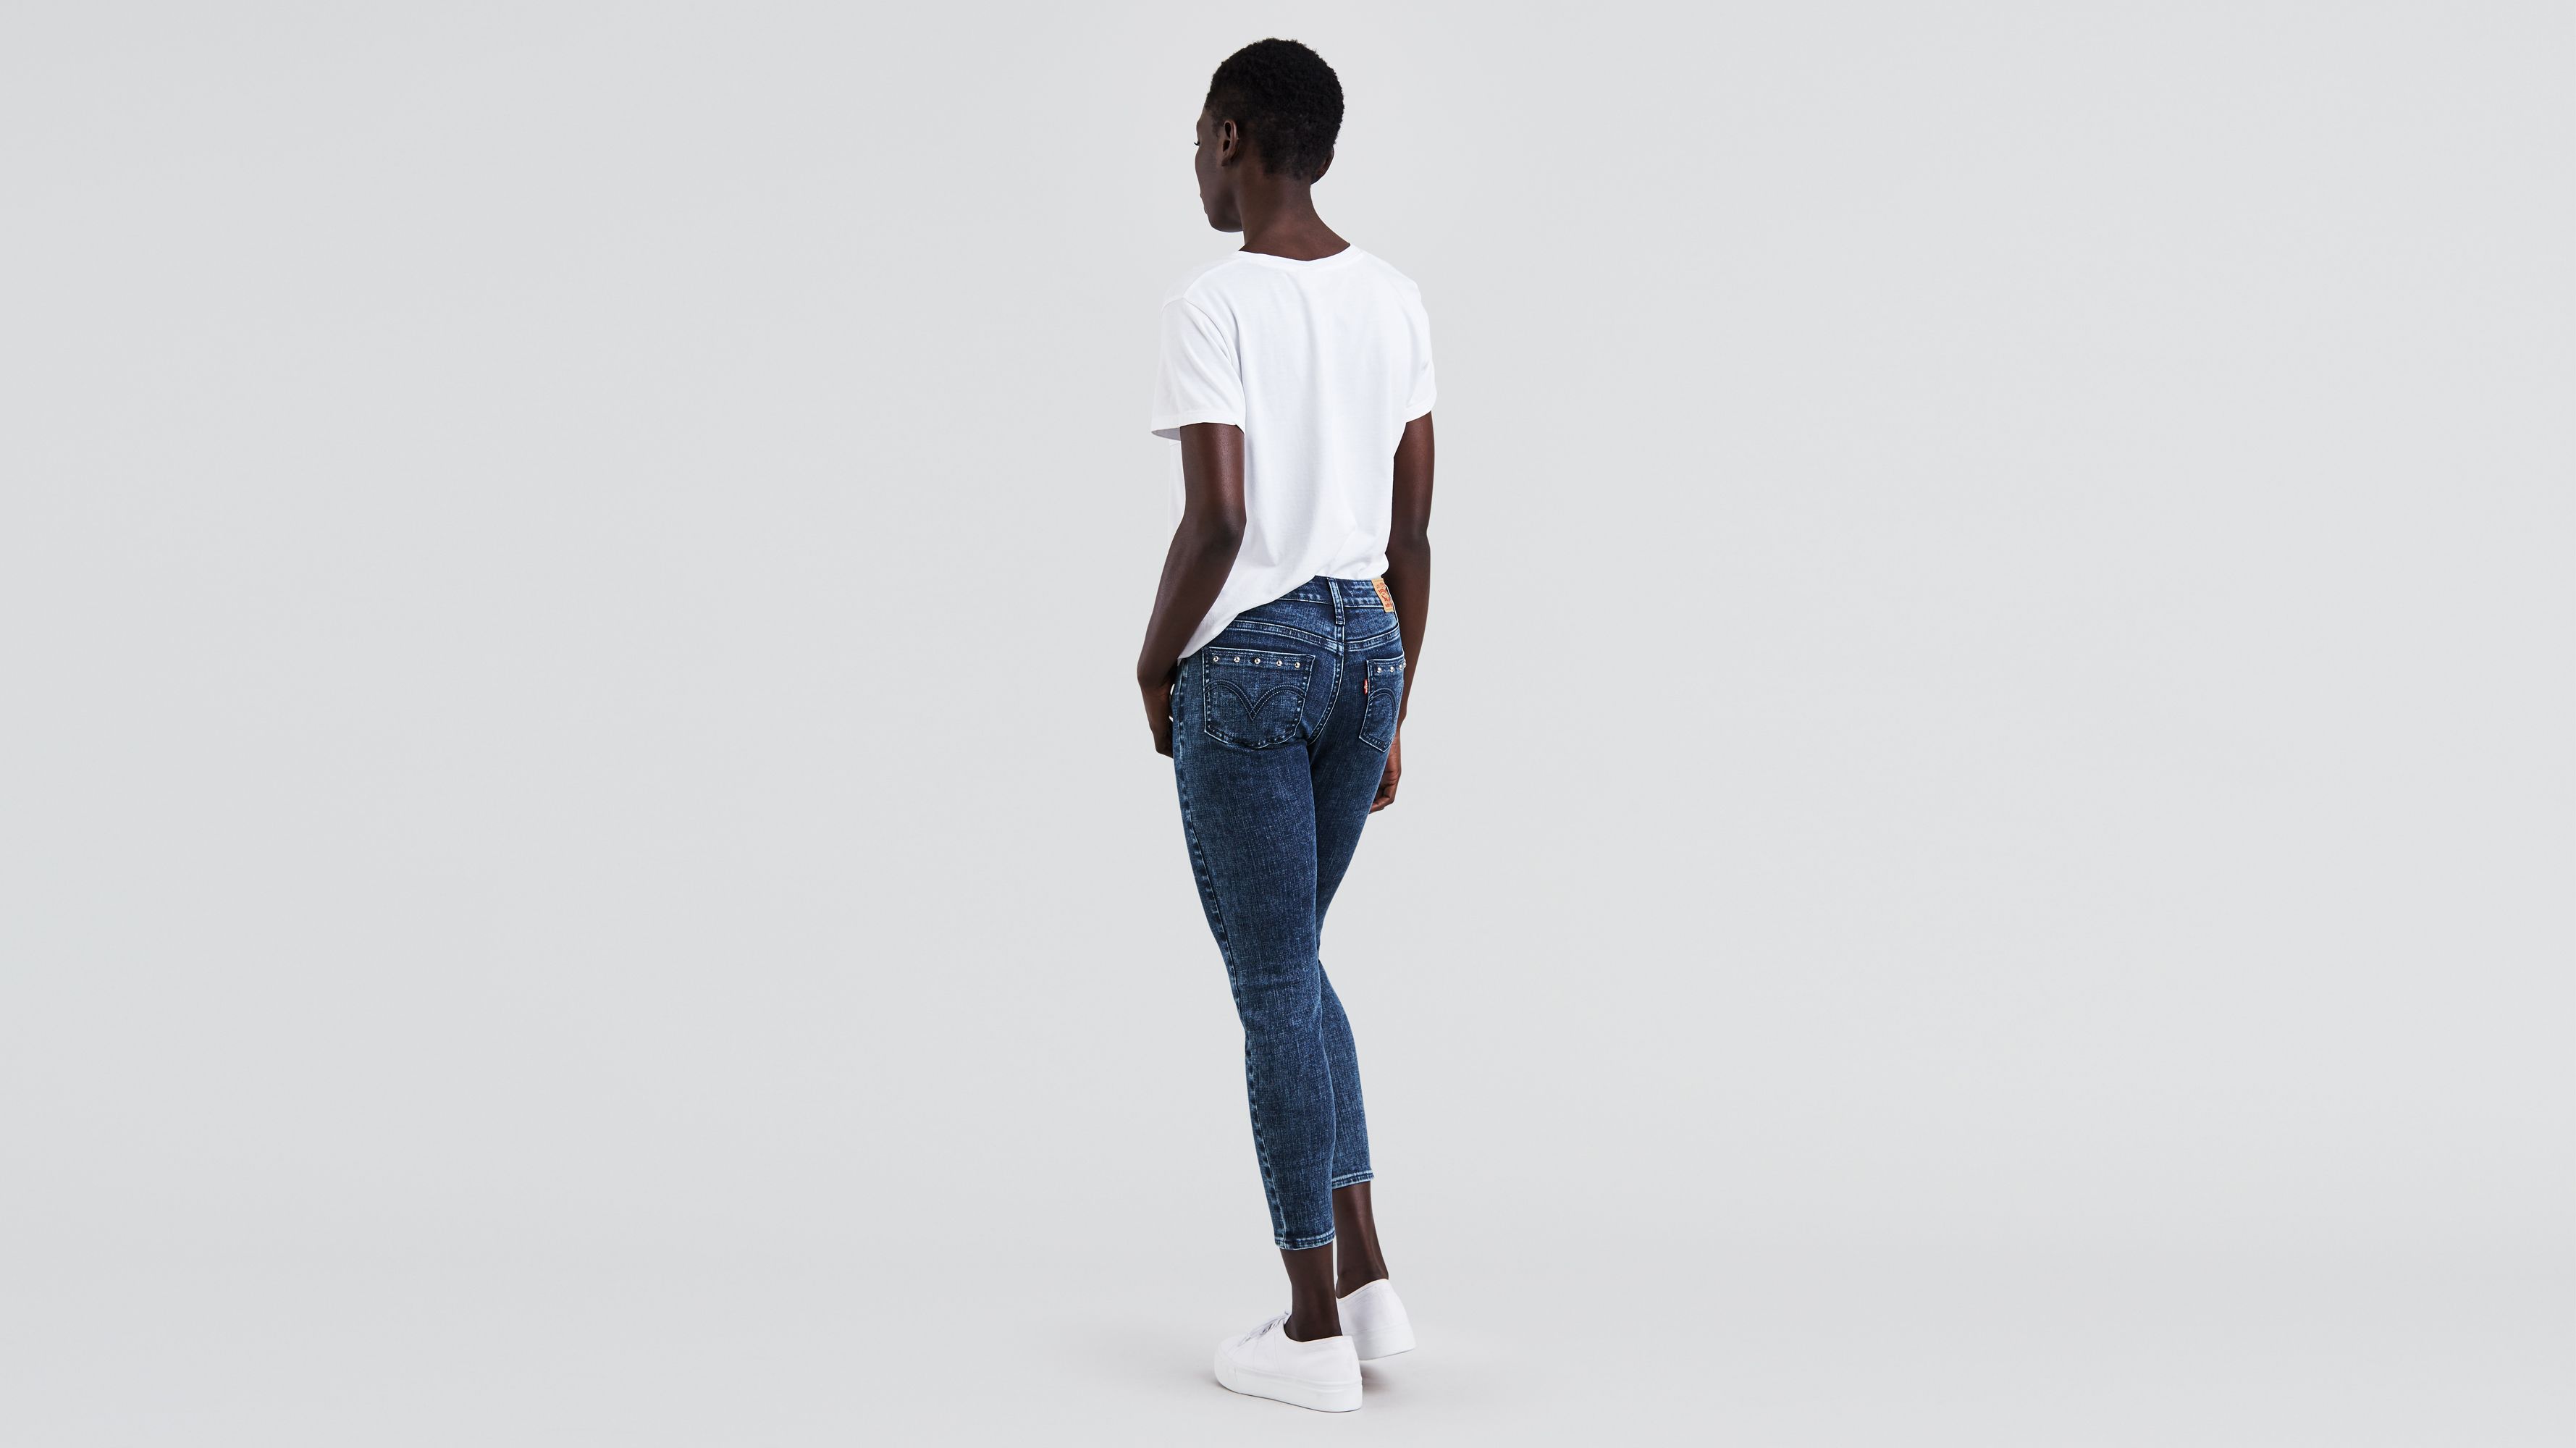 levi's 535 womens jeans